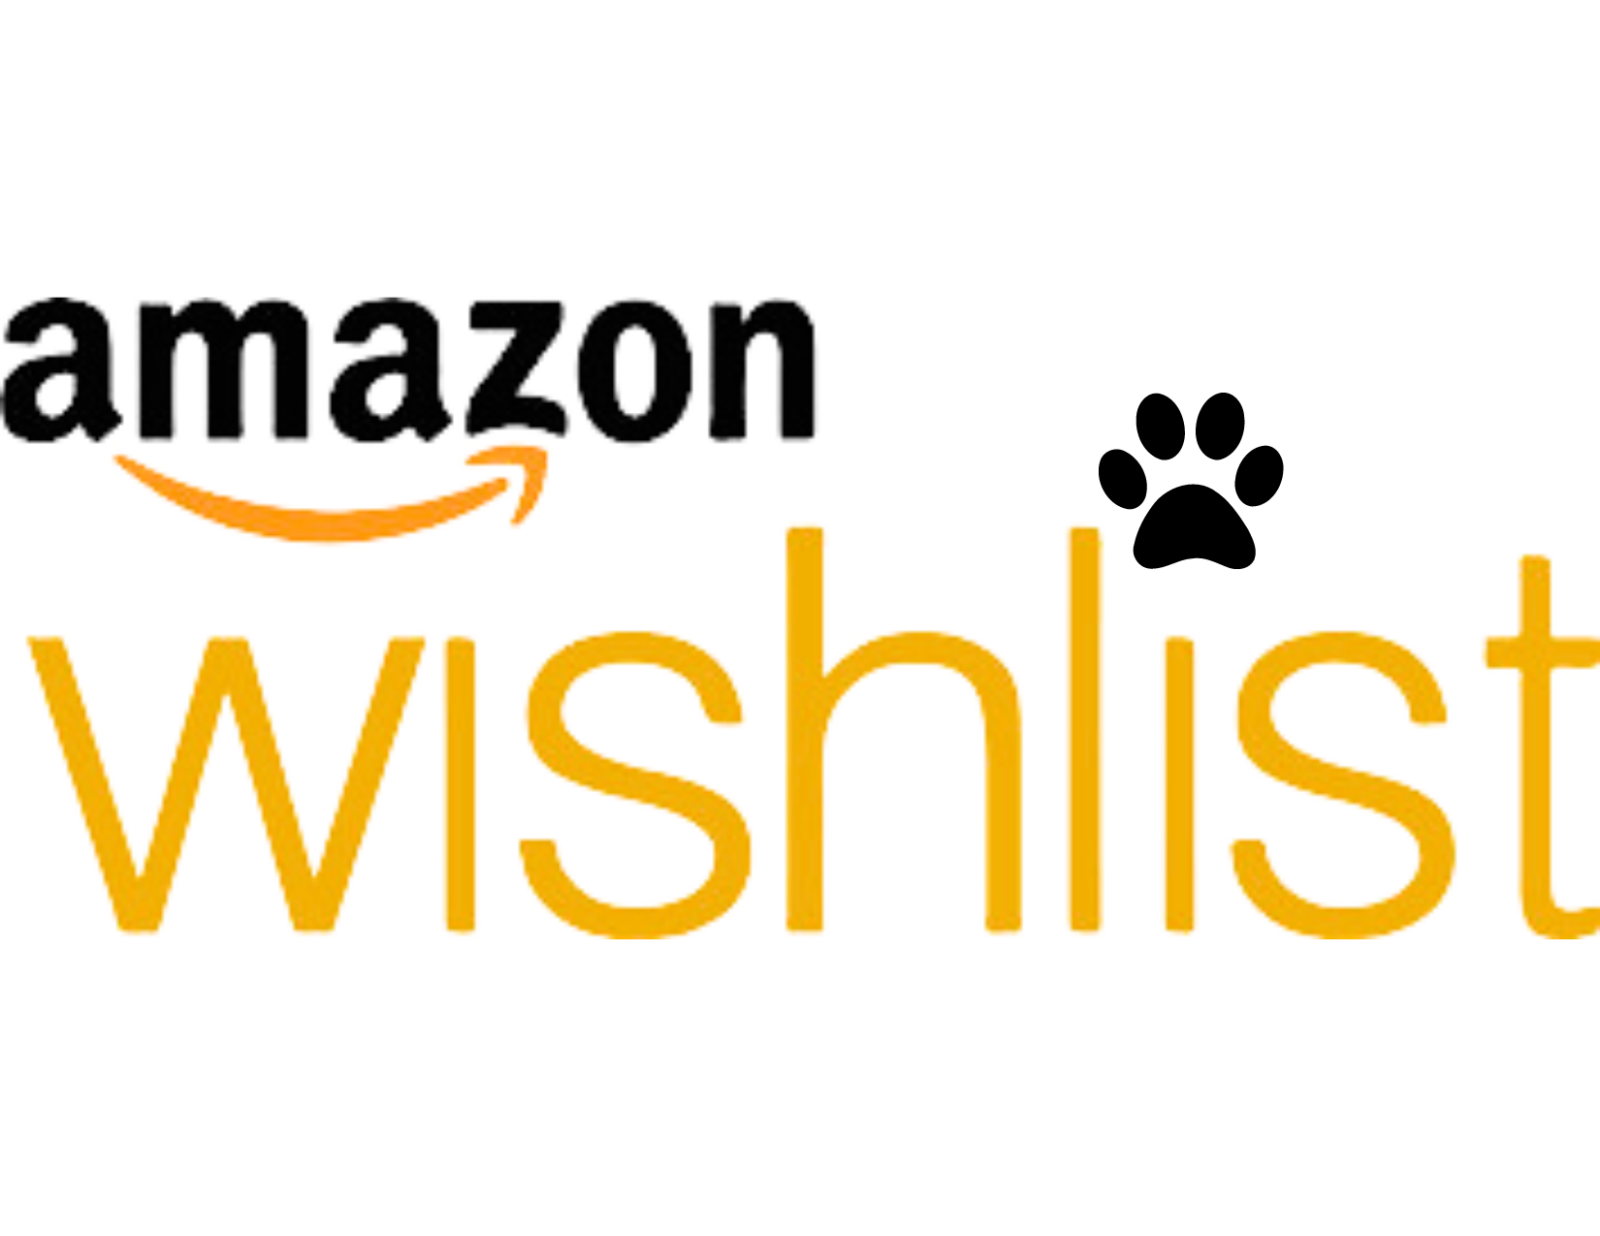 Amazon Wish list